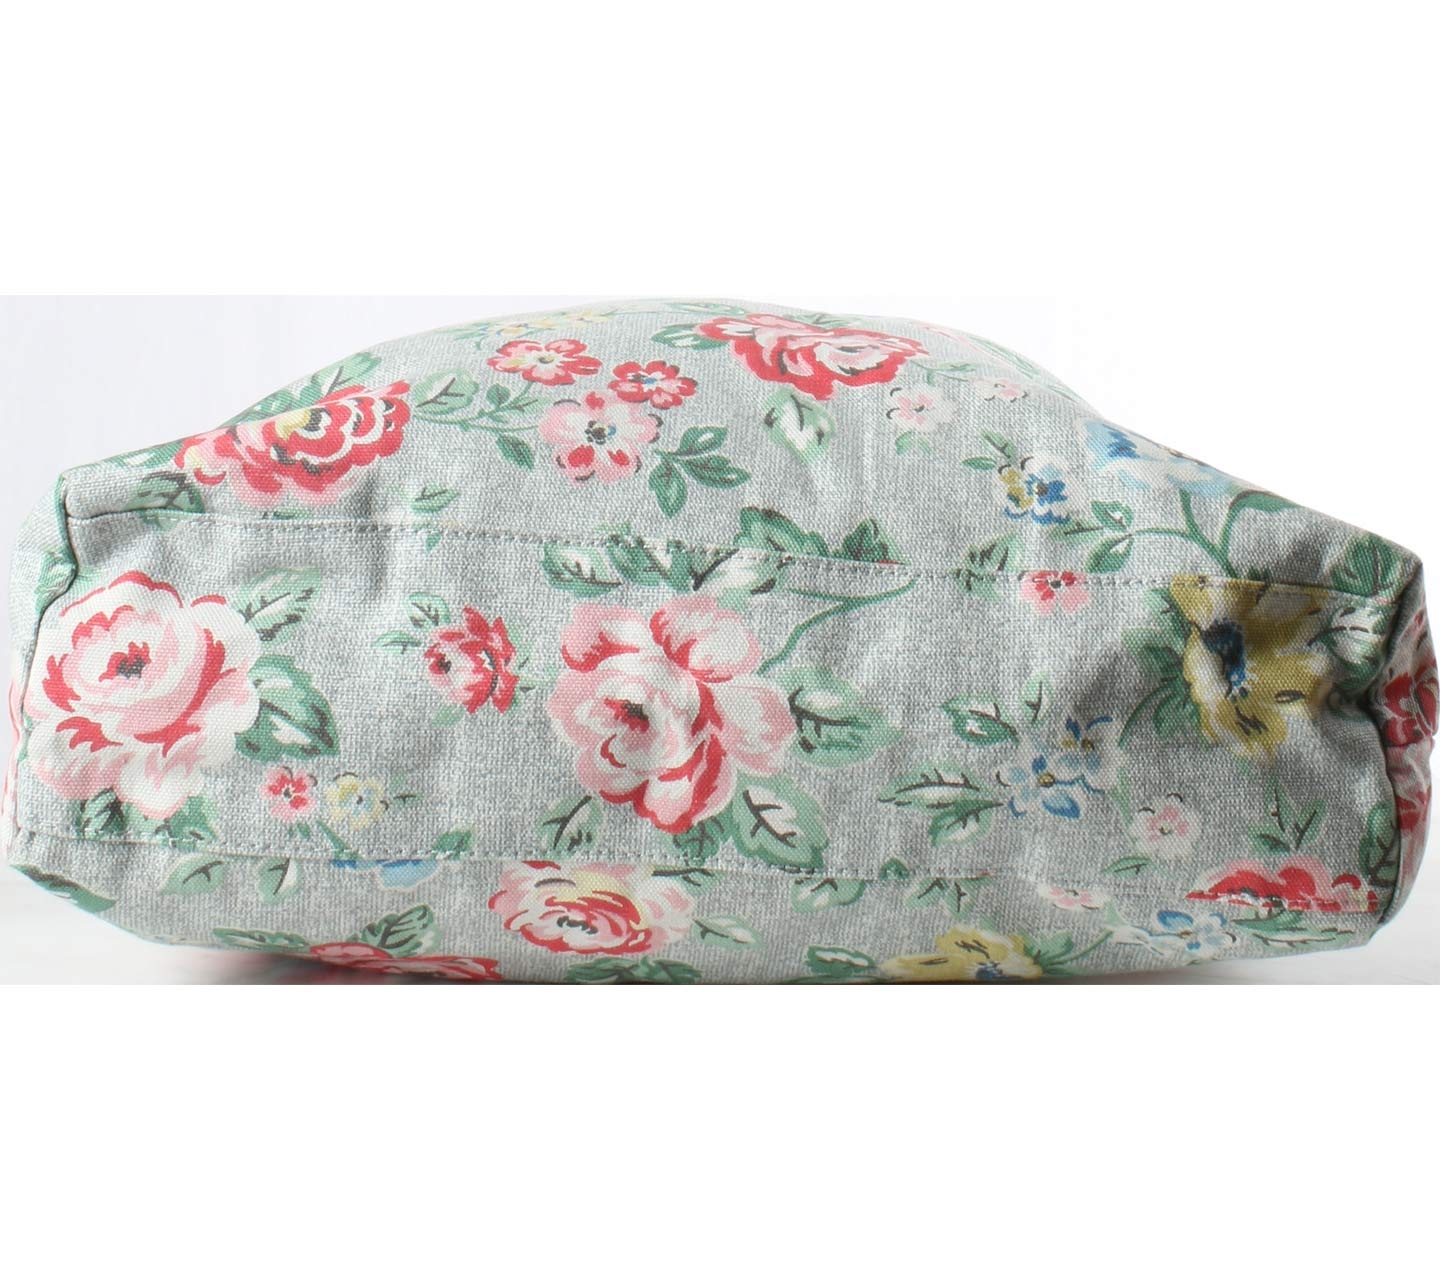 Cath Kidston Grey Floral Sling Bag